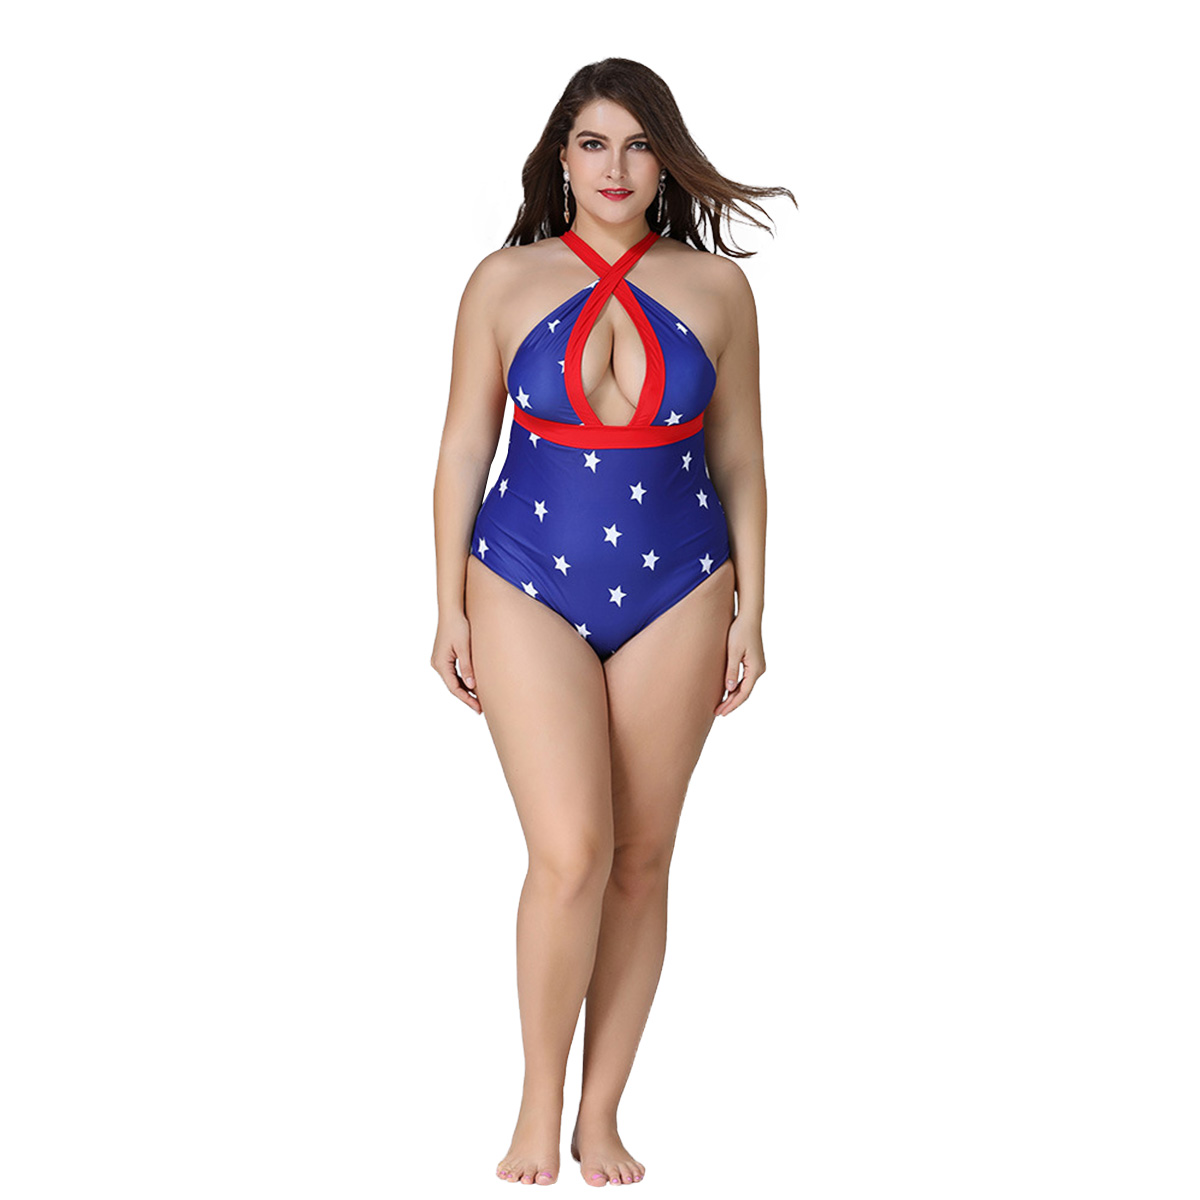  Aulyffo Girls Swimsuits Bikini Set,Two Piece Swimsuit Criss  Cross Bathing Suit Girls' Swimwear : Clothing, Shoes & Jewelry